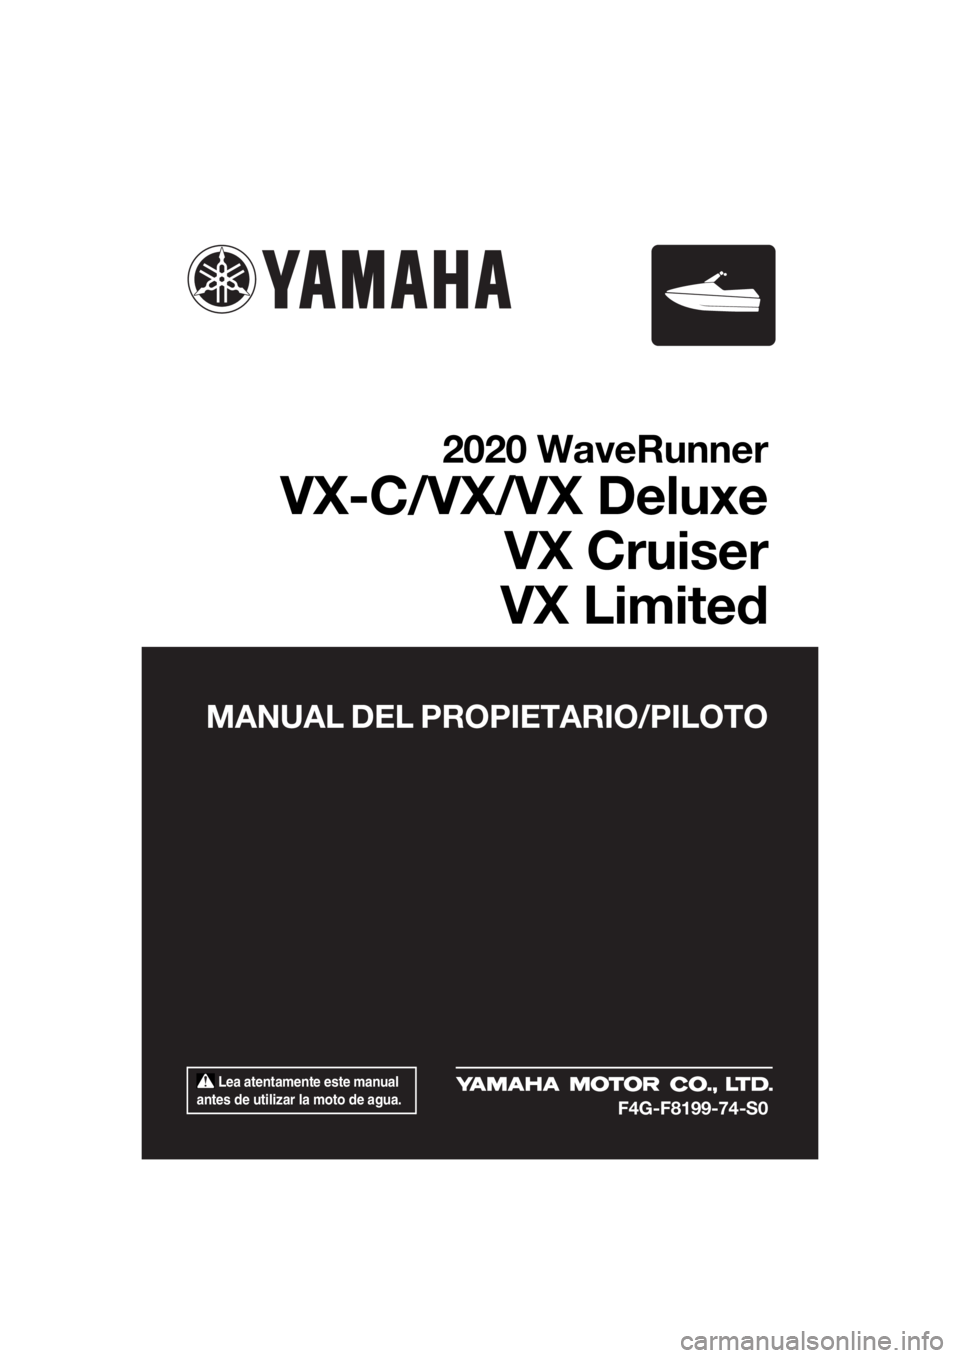 YAMAHA VX 2020  Manuale de Empleo (in Spanish)  Lea atentamente este manual 
antes de utilizar la moto de agua.
MANUAL DEL PROPIETARIO/PILOTO
2020 WaveRunner
VX-C/VX/VX Deluxe
VX Cruiser
VX Limited
F4G-F8199-74-S0
UF4G74S0.book  Page 1  Monday, Ju